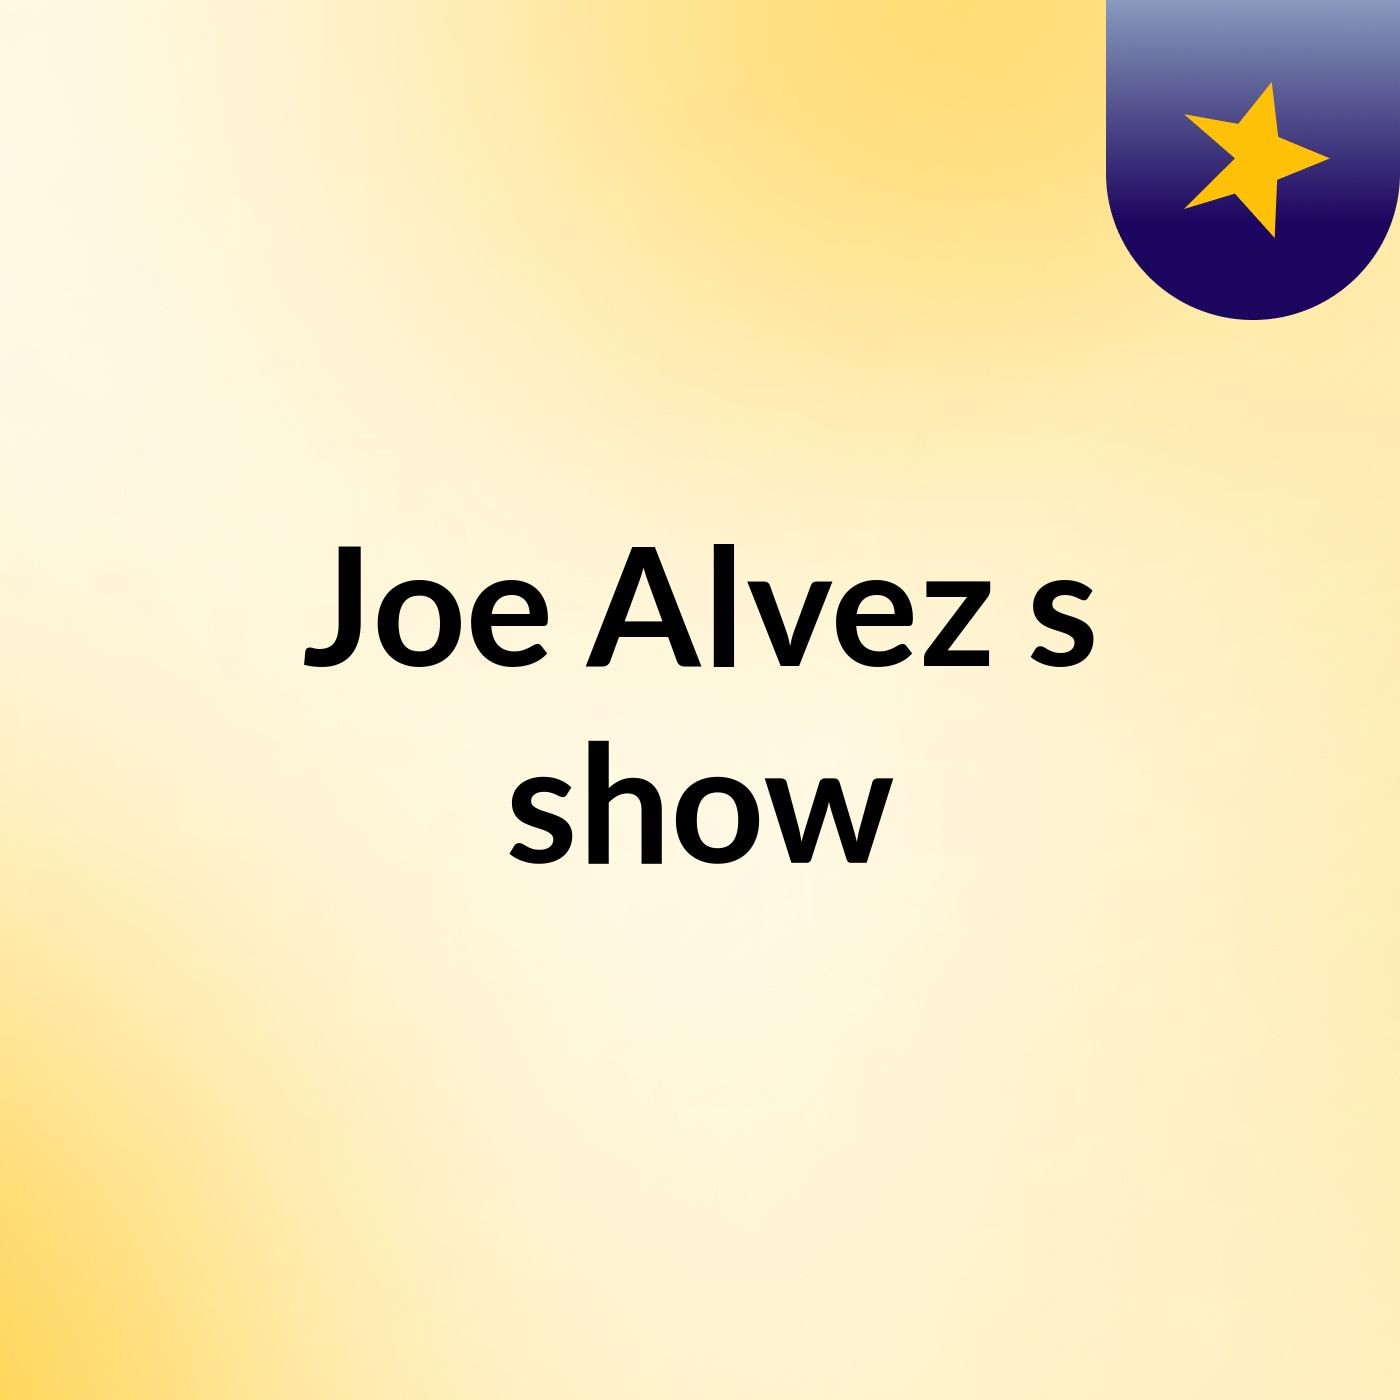 Joe Alvez's show